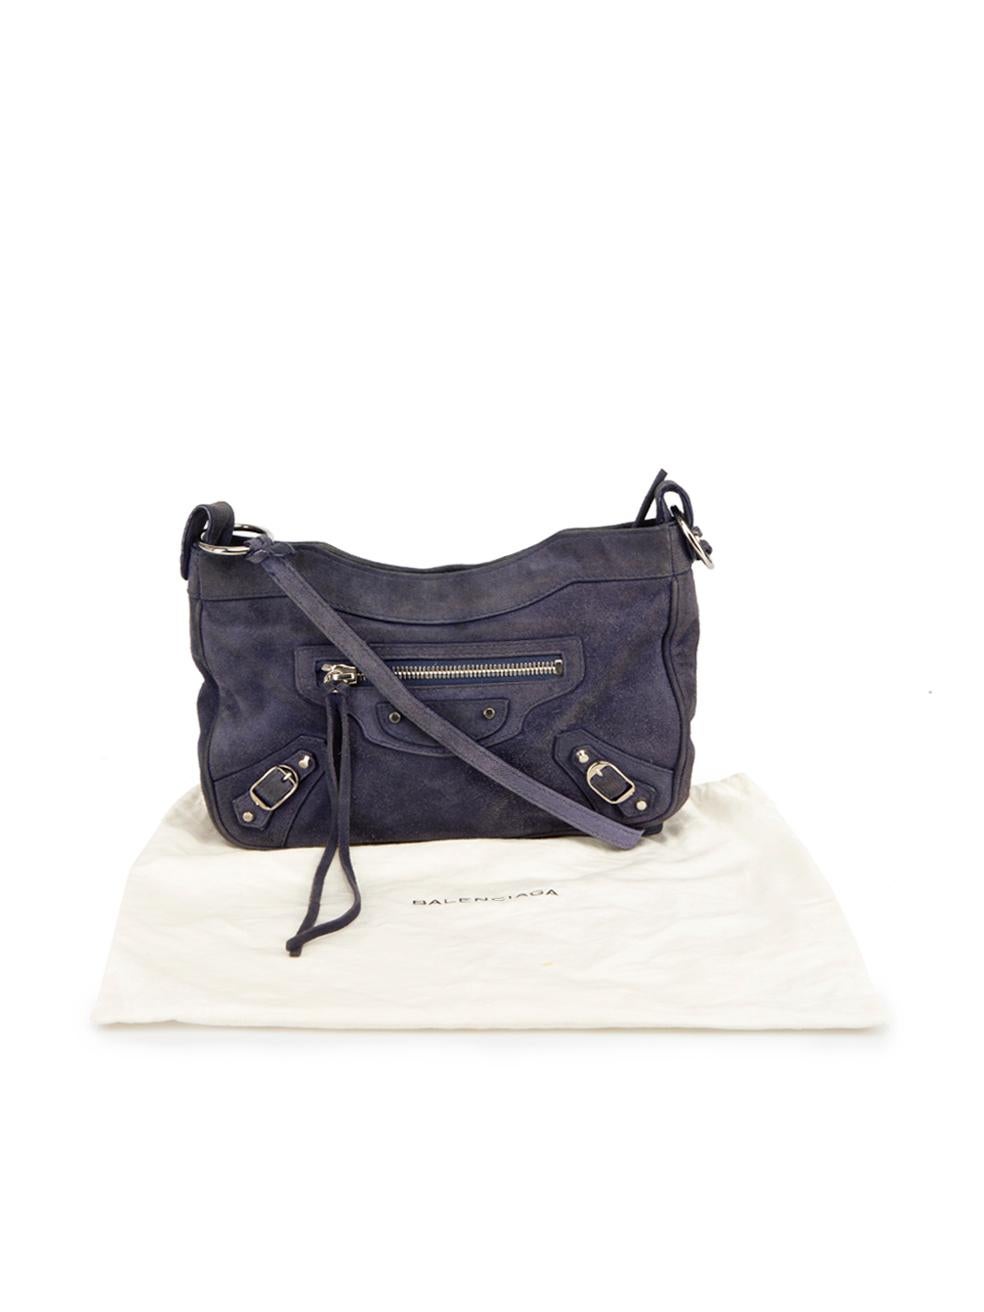 Balenciaga Women's Purple Suede Crossbody Bag For Sale 4